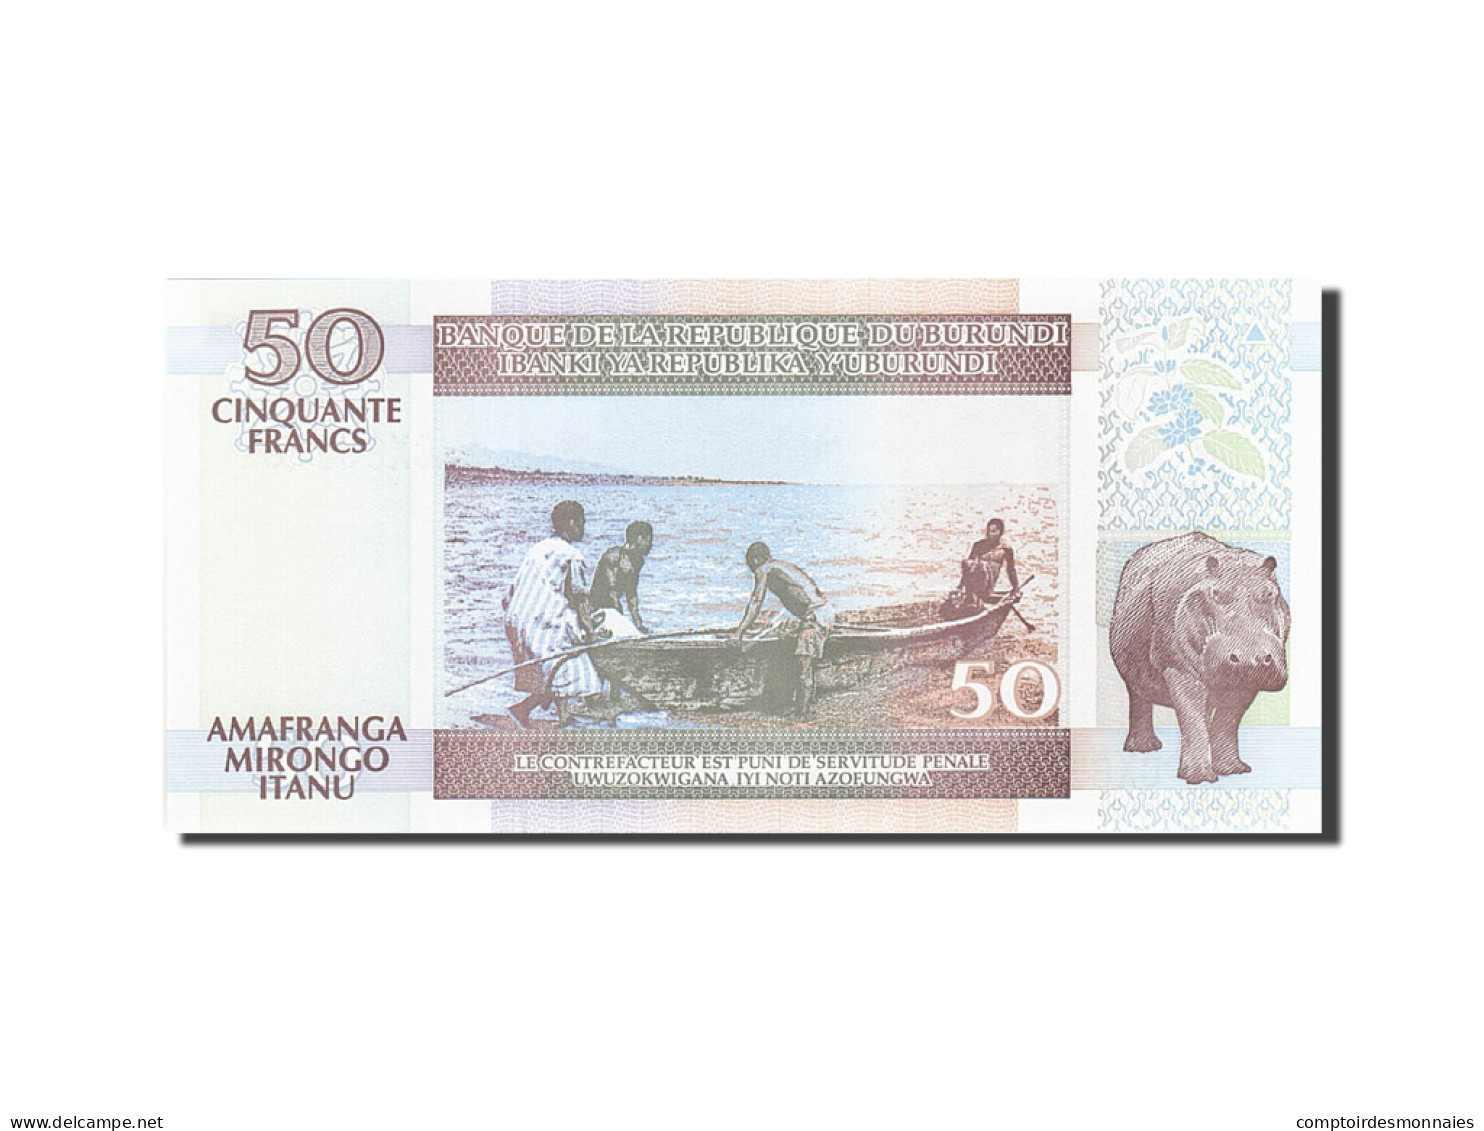 Billet, Burundi, 50 Francs, 1993-1997, 2005-02-05, KM:36e, NEUF - Burundi